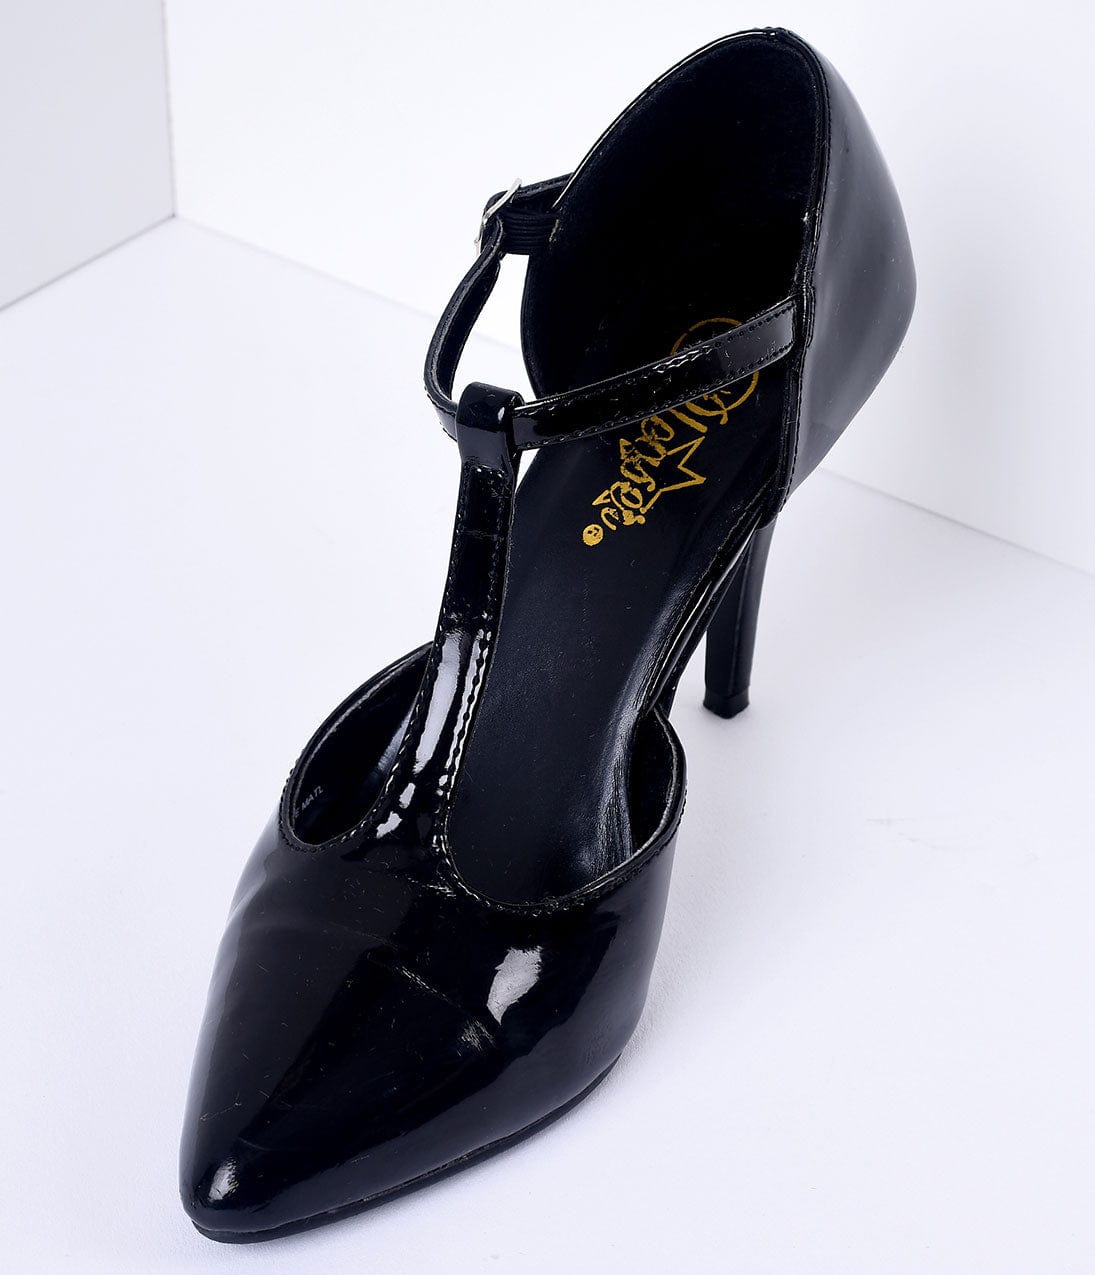 1920s Style Black T-Strap Heels 